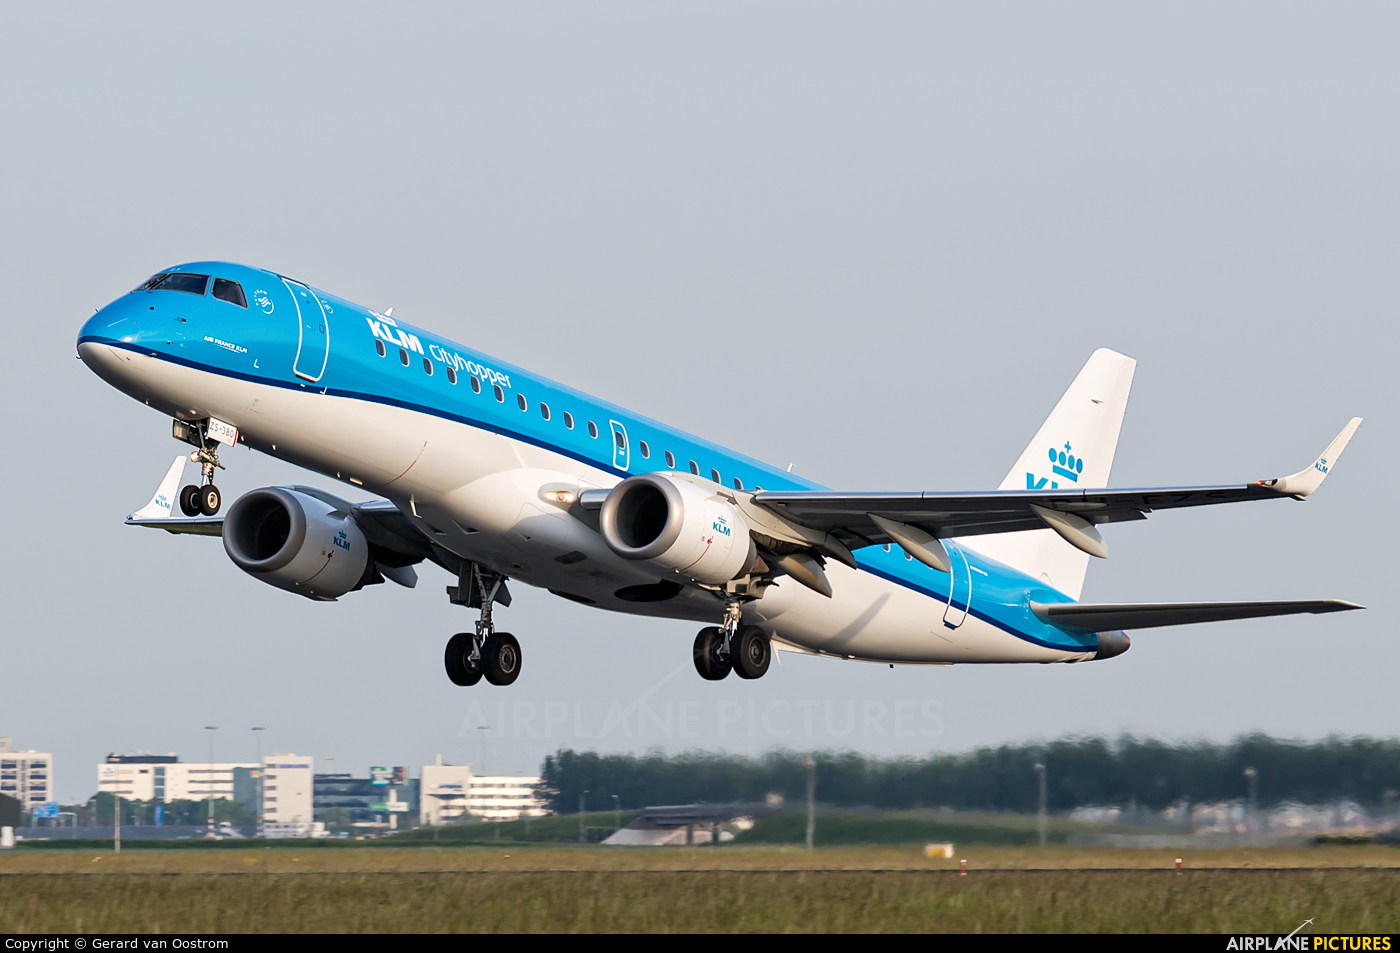 KLM Cityhopper PH-EZS aircraft at Amsterdam - Schiphol